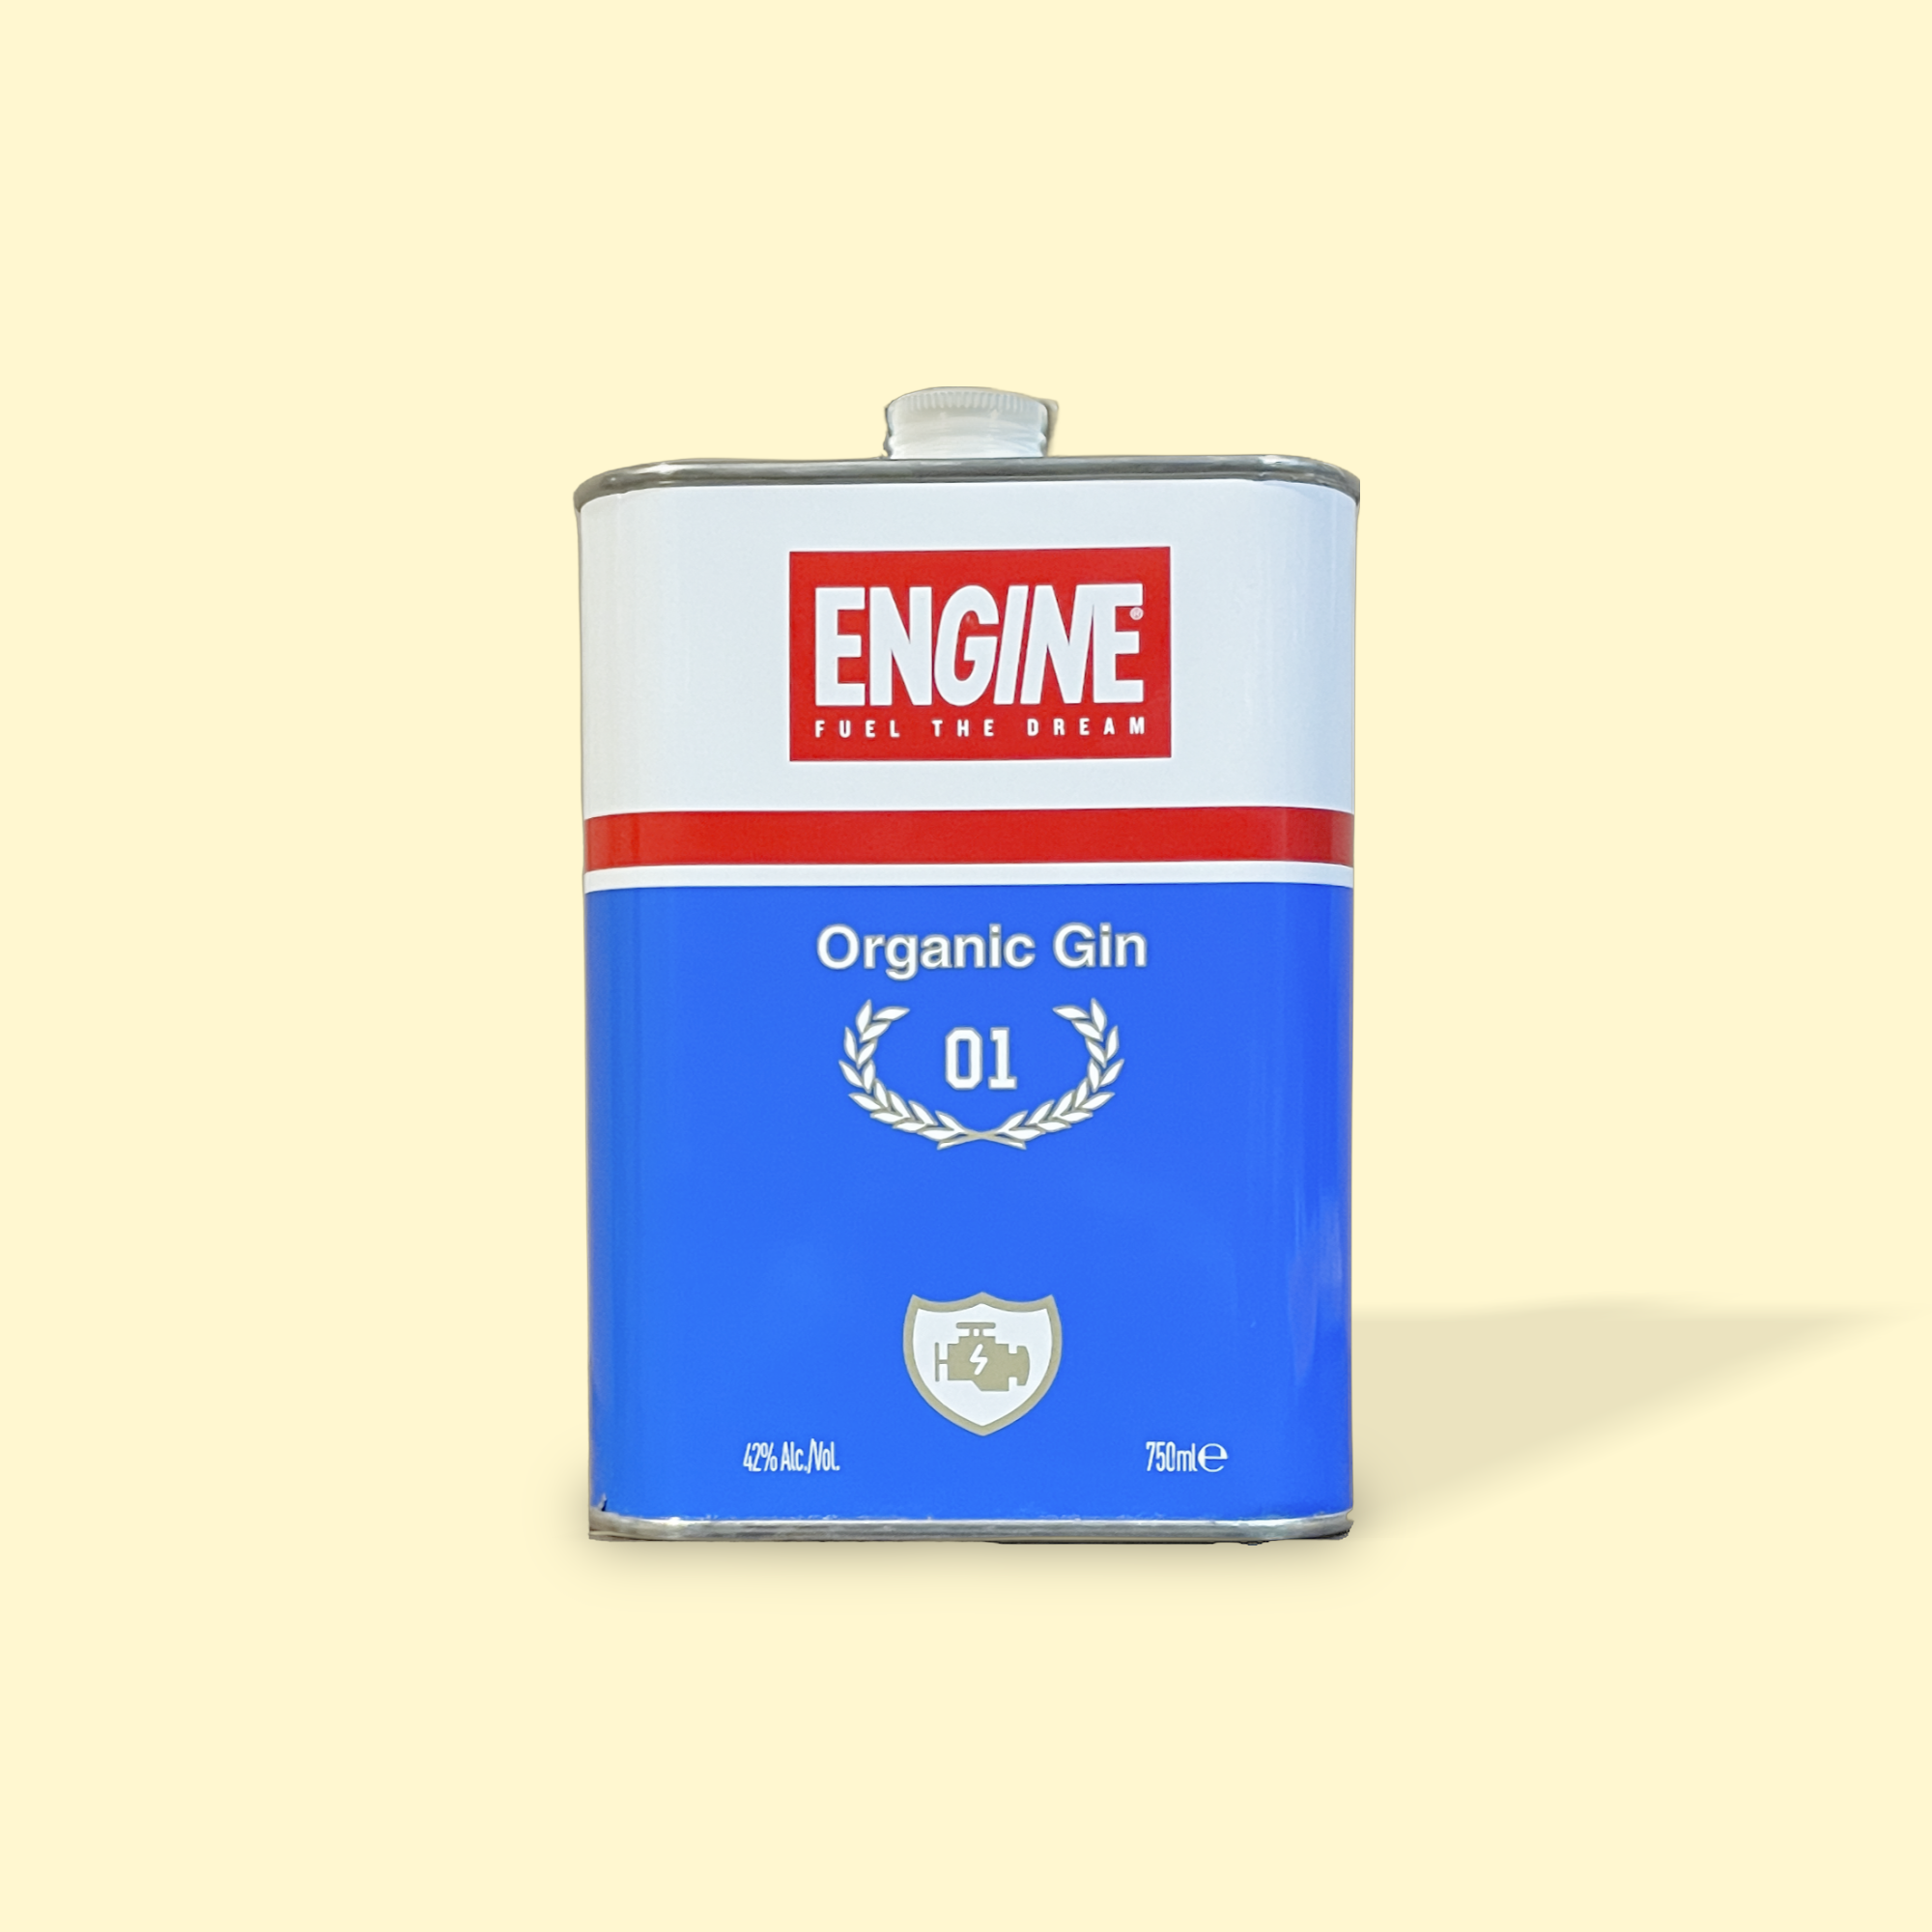 Engine Fuel The Dream 01 Pure Organic Gin NV – B-21